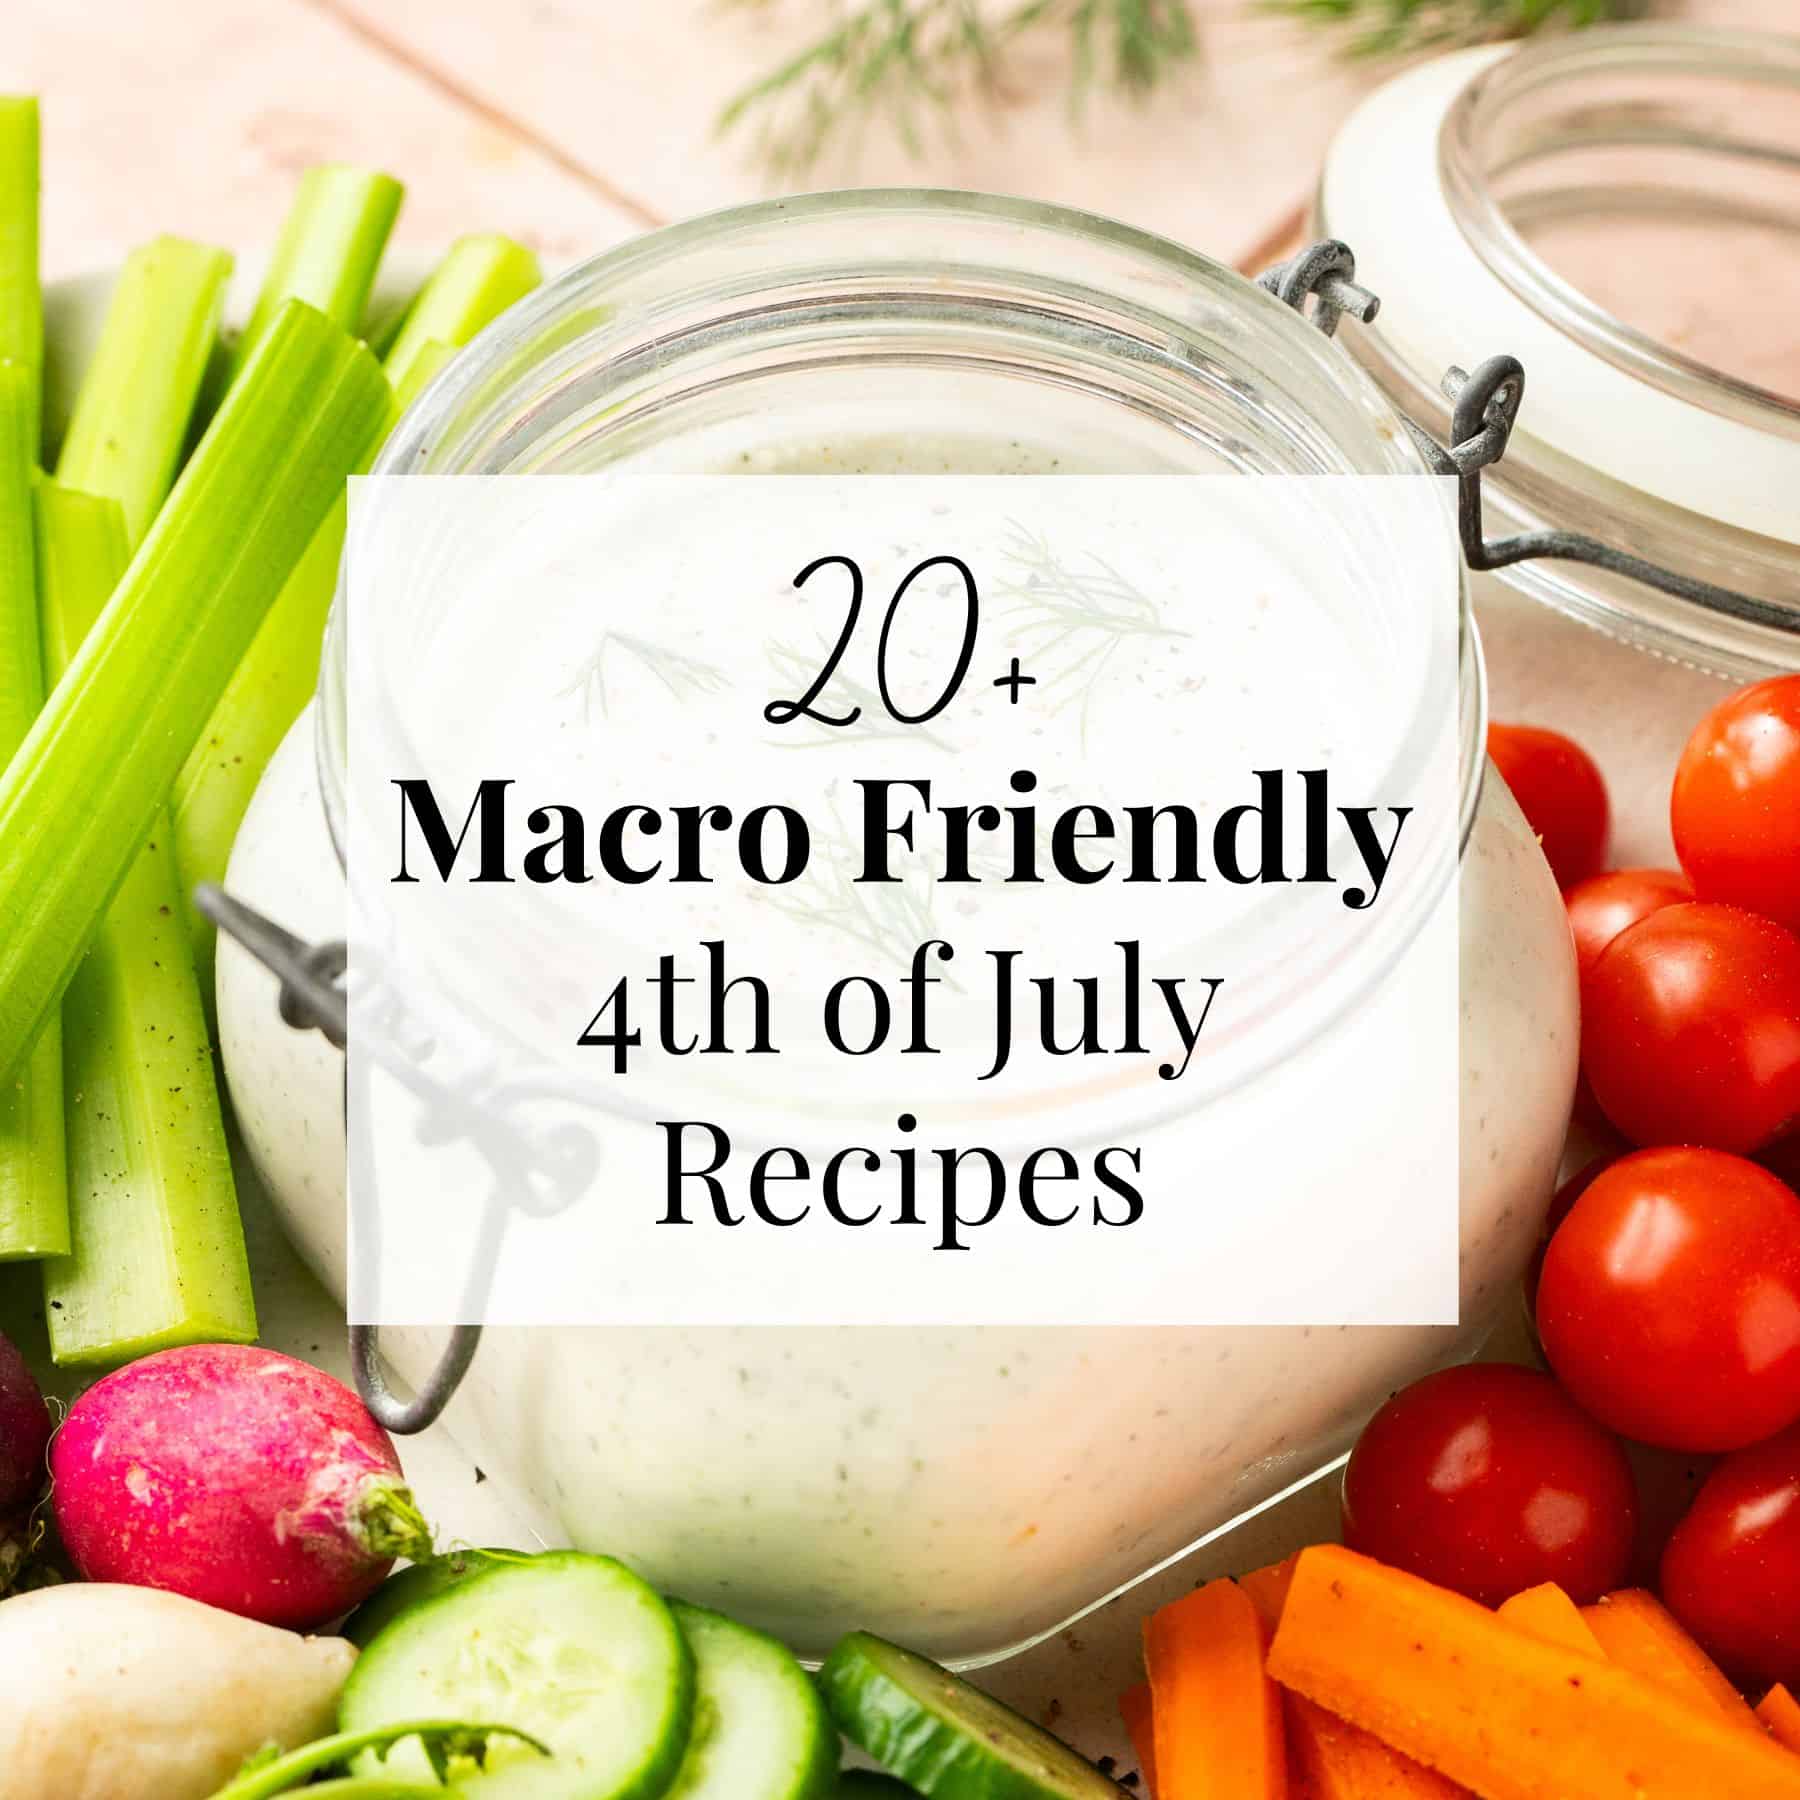 20+ Macro Friendly 4th of July Recipes